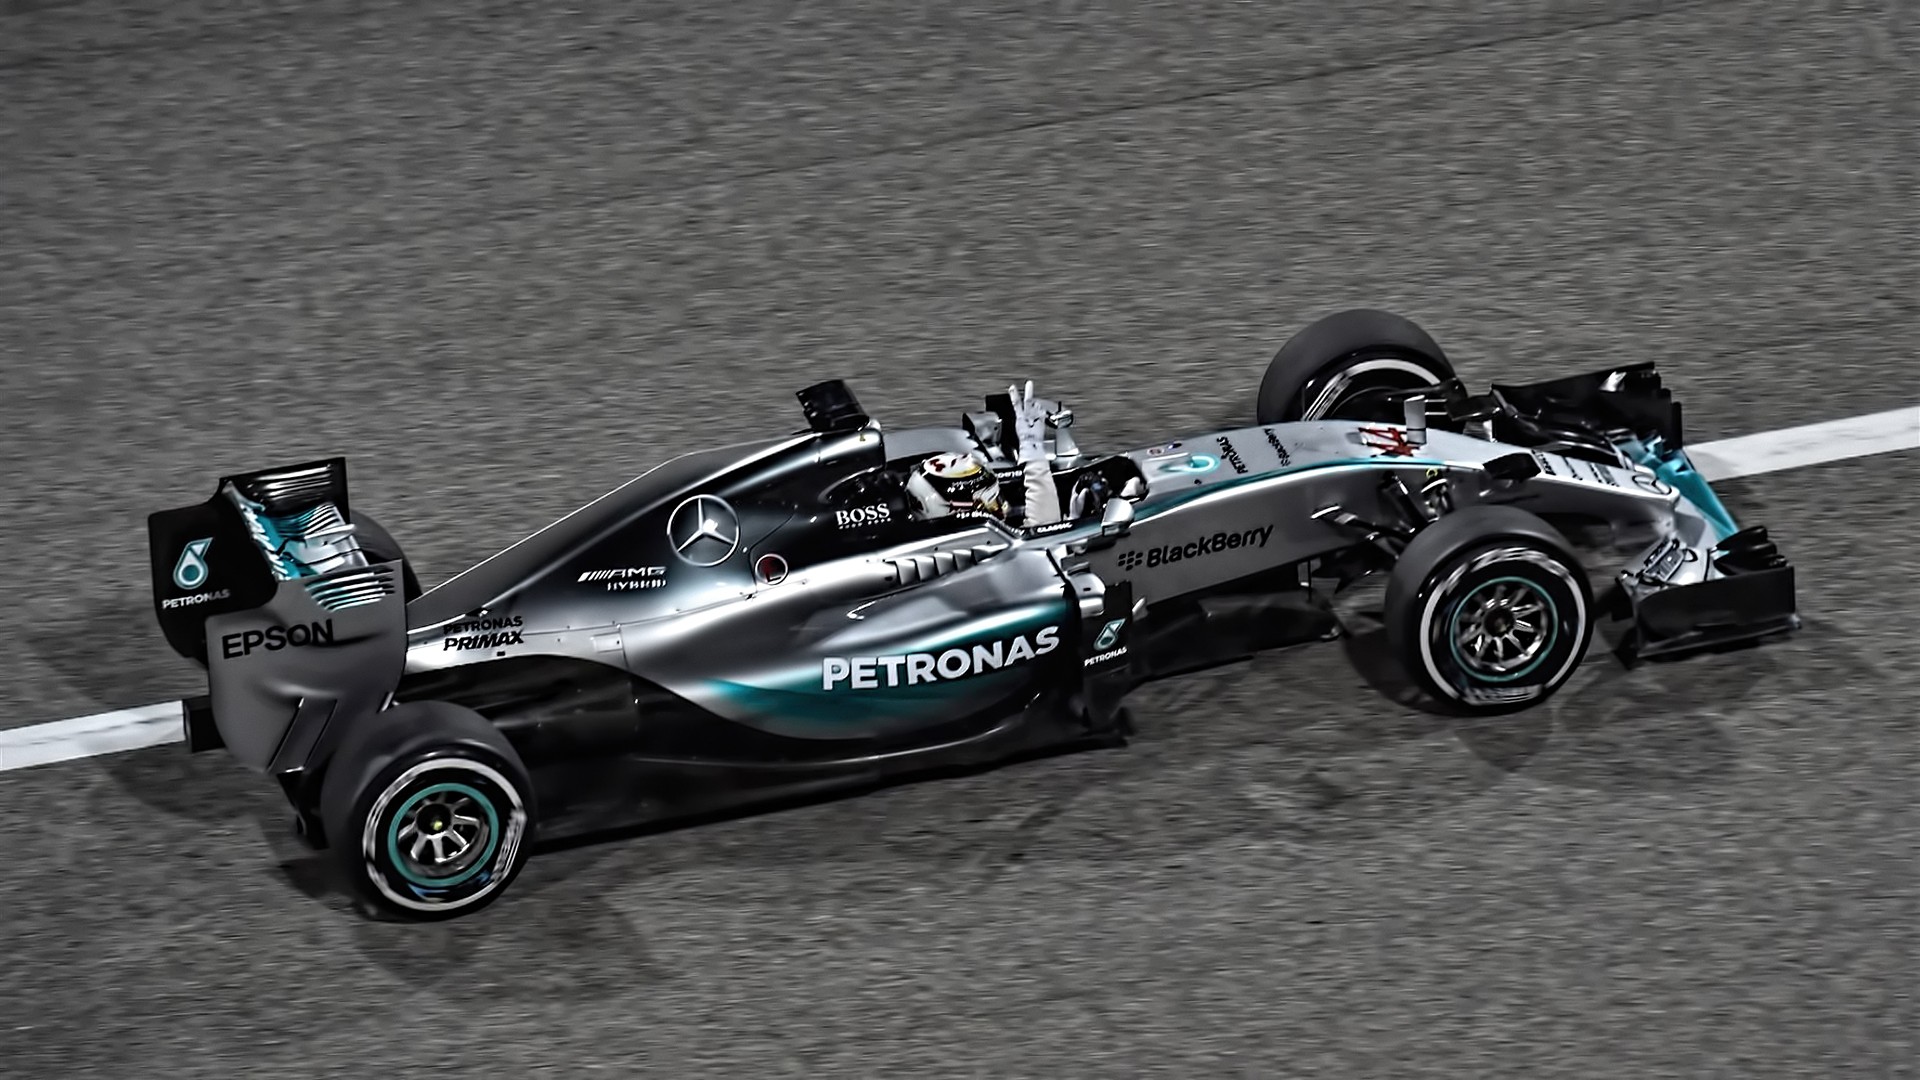 Formula 1 Mercedes F1 Lewis Hamilton Racing Wallpapers Hd Desktop And Mobile Backgrounds